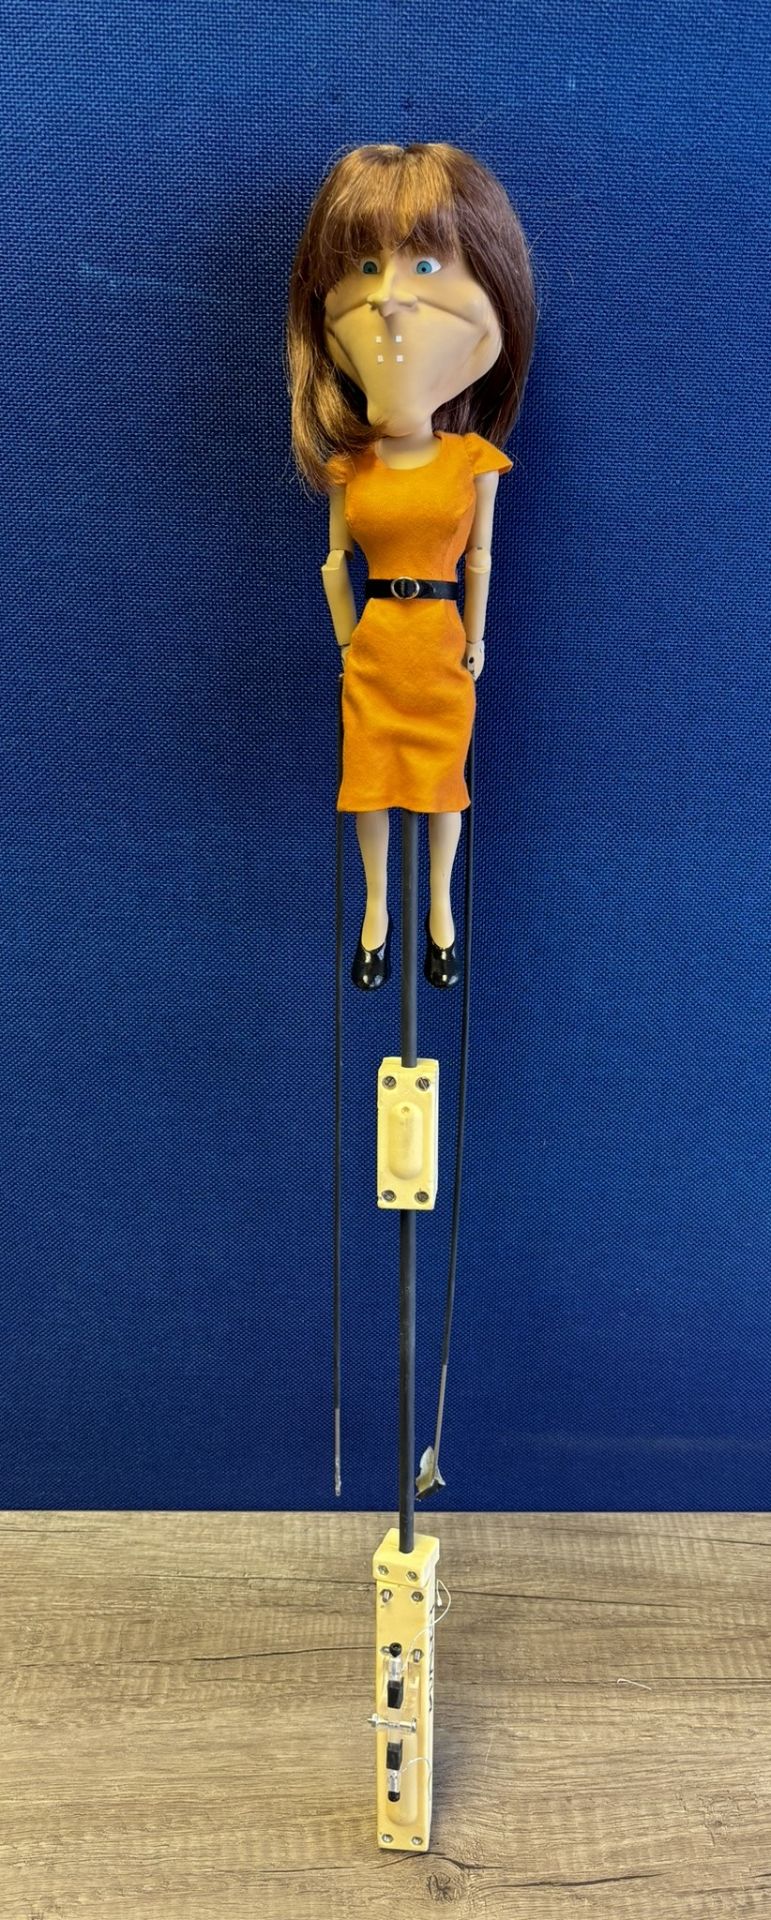 Newzoid puppet - Kay Burley - Image 3 of 3